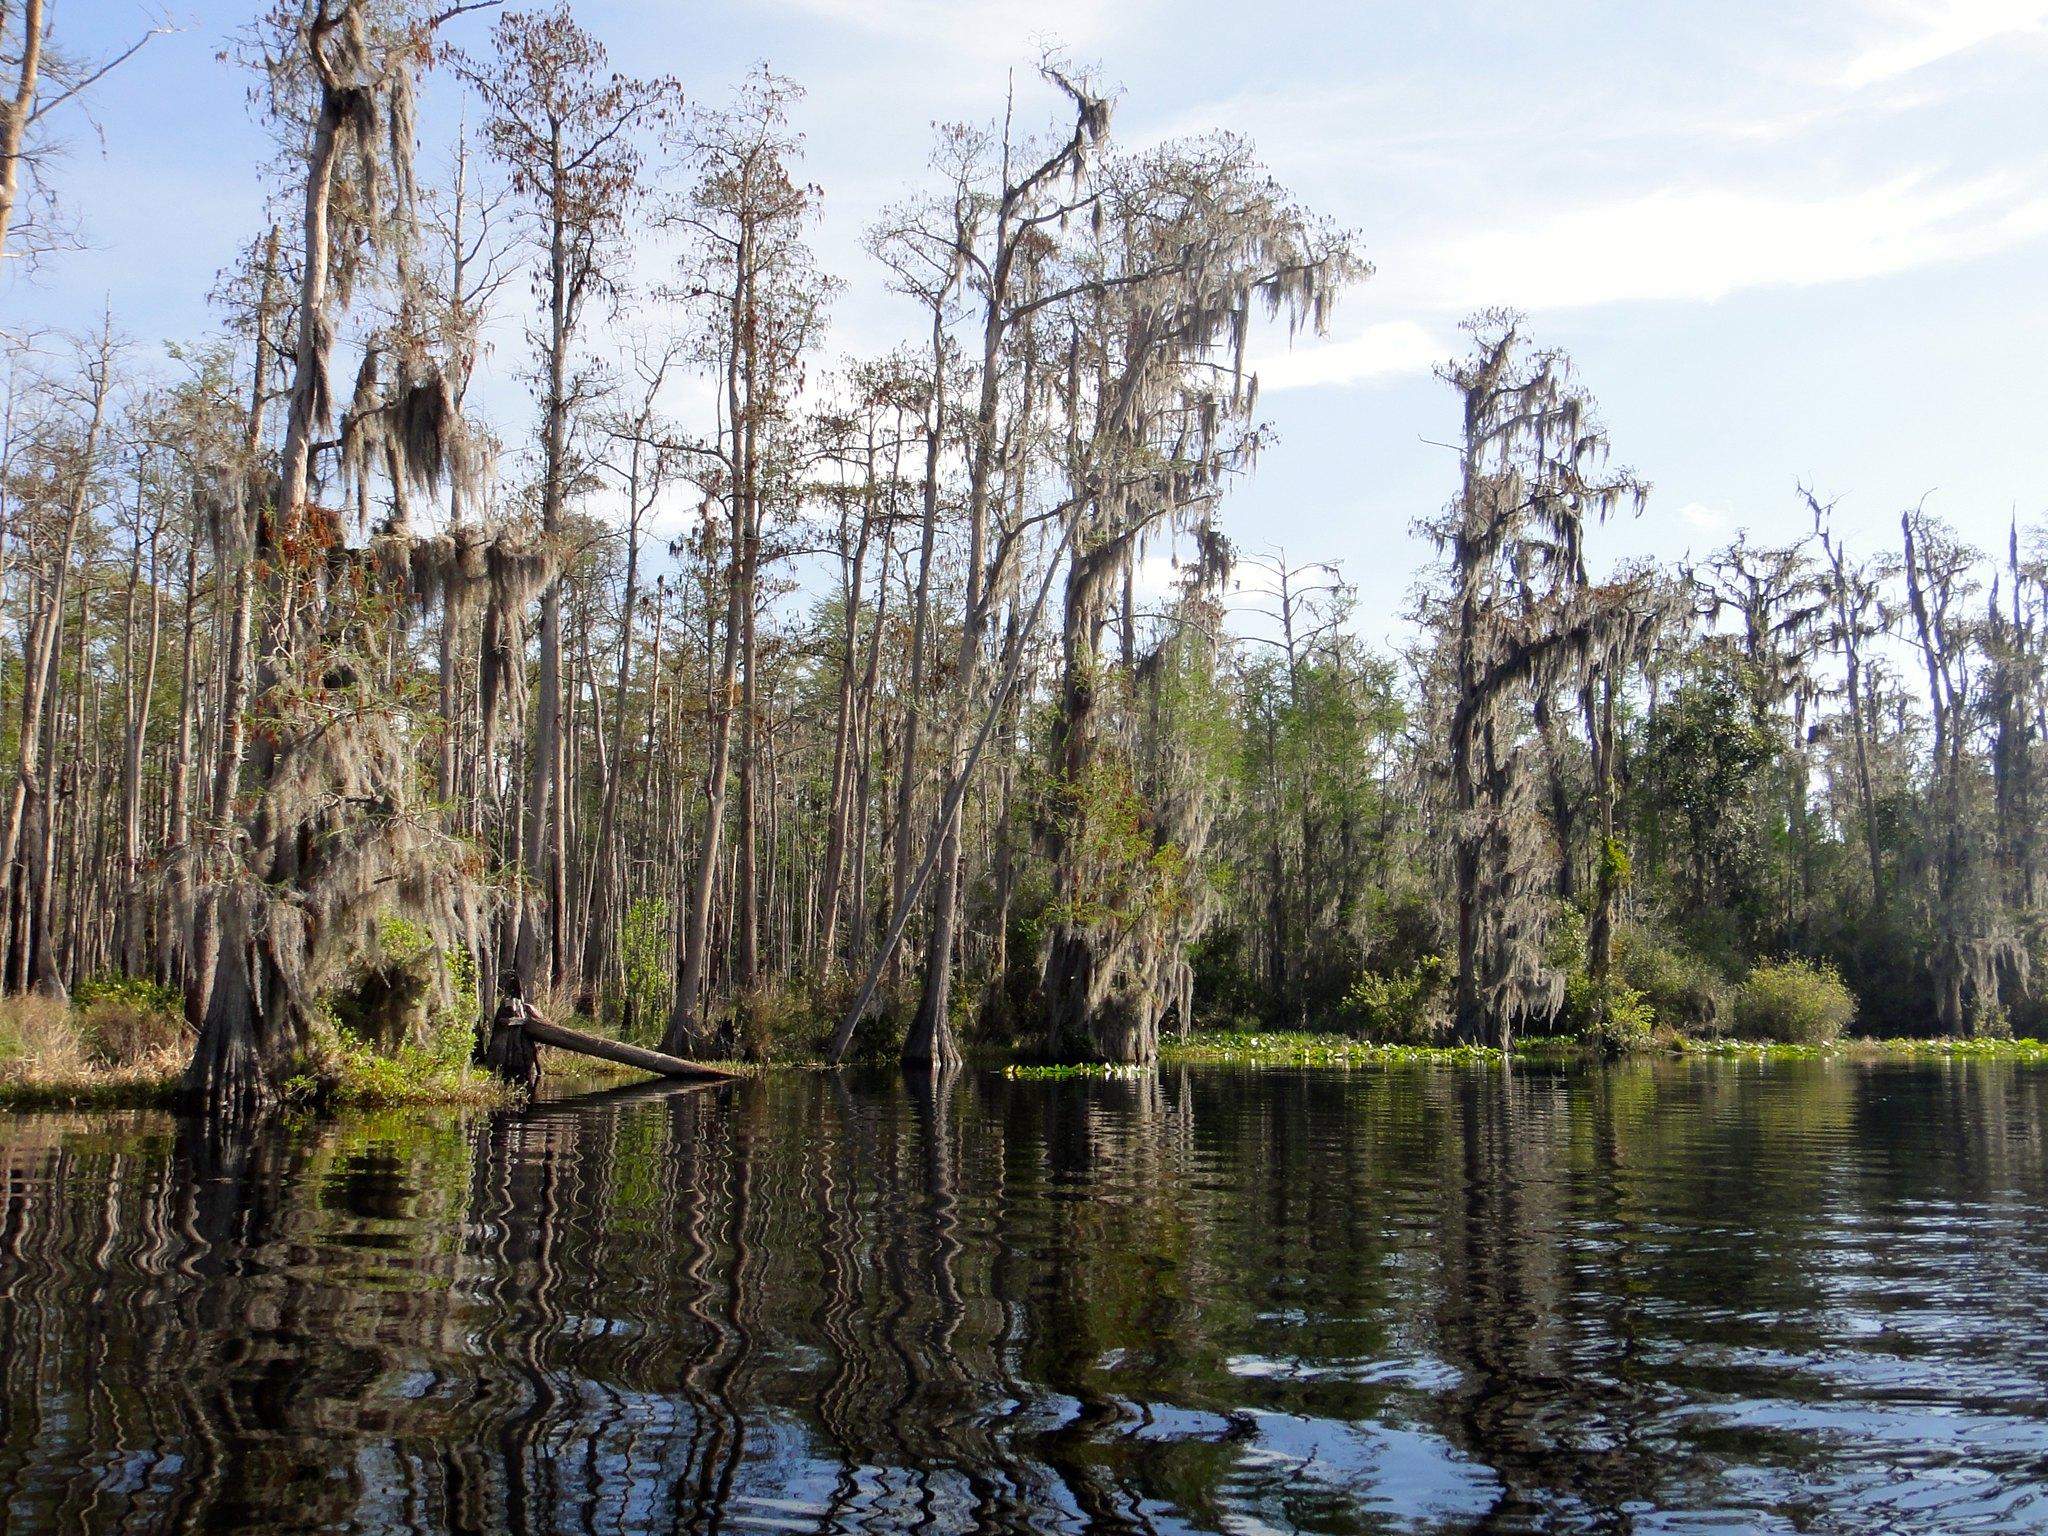 Proposal to mine near Okefenokee Swamp raises old fears